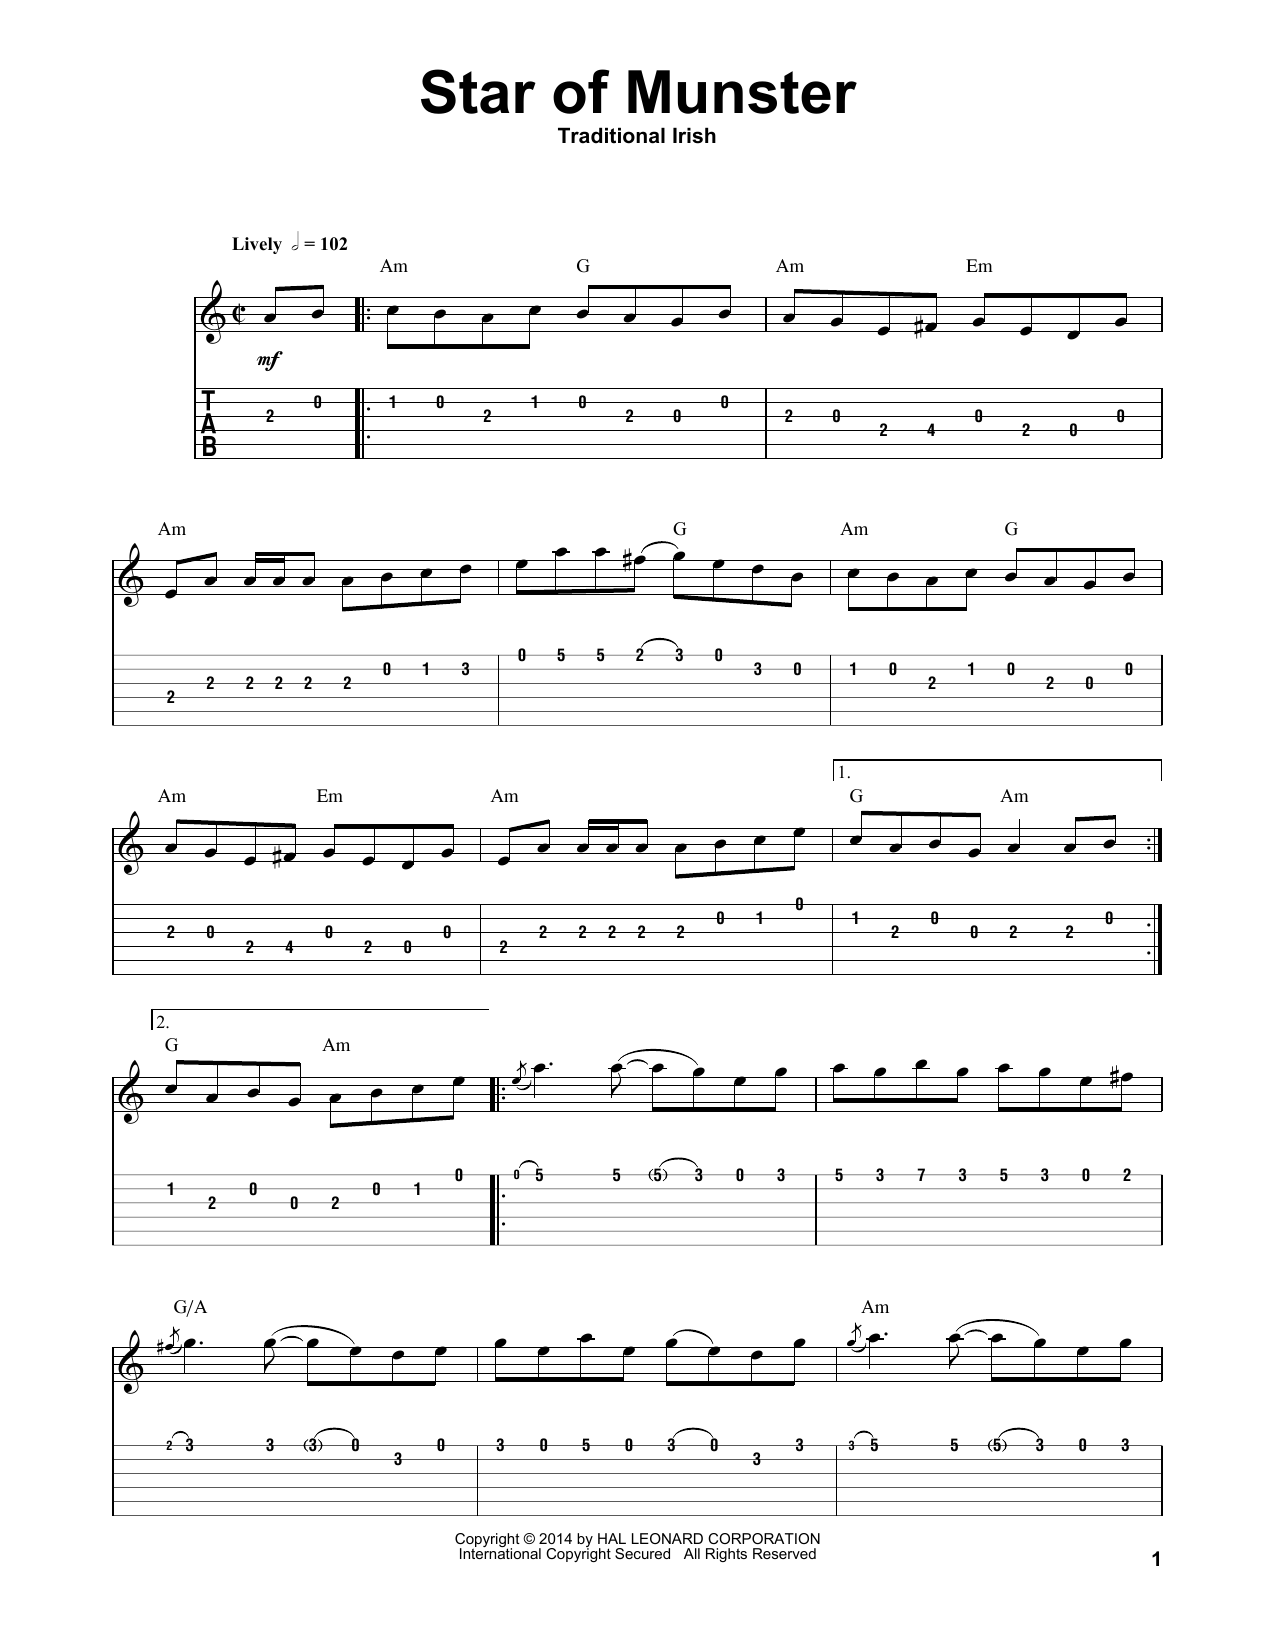 Irish Folksong Star Of Munster Sheet Music Notes & Chords for Guitar Tab Play-Along - Download or Print PDF